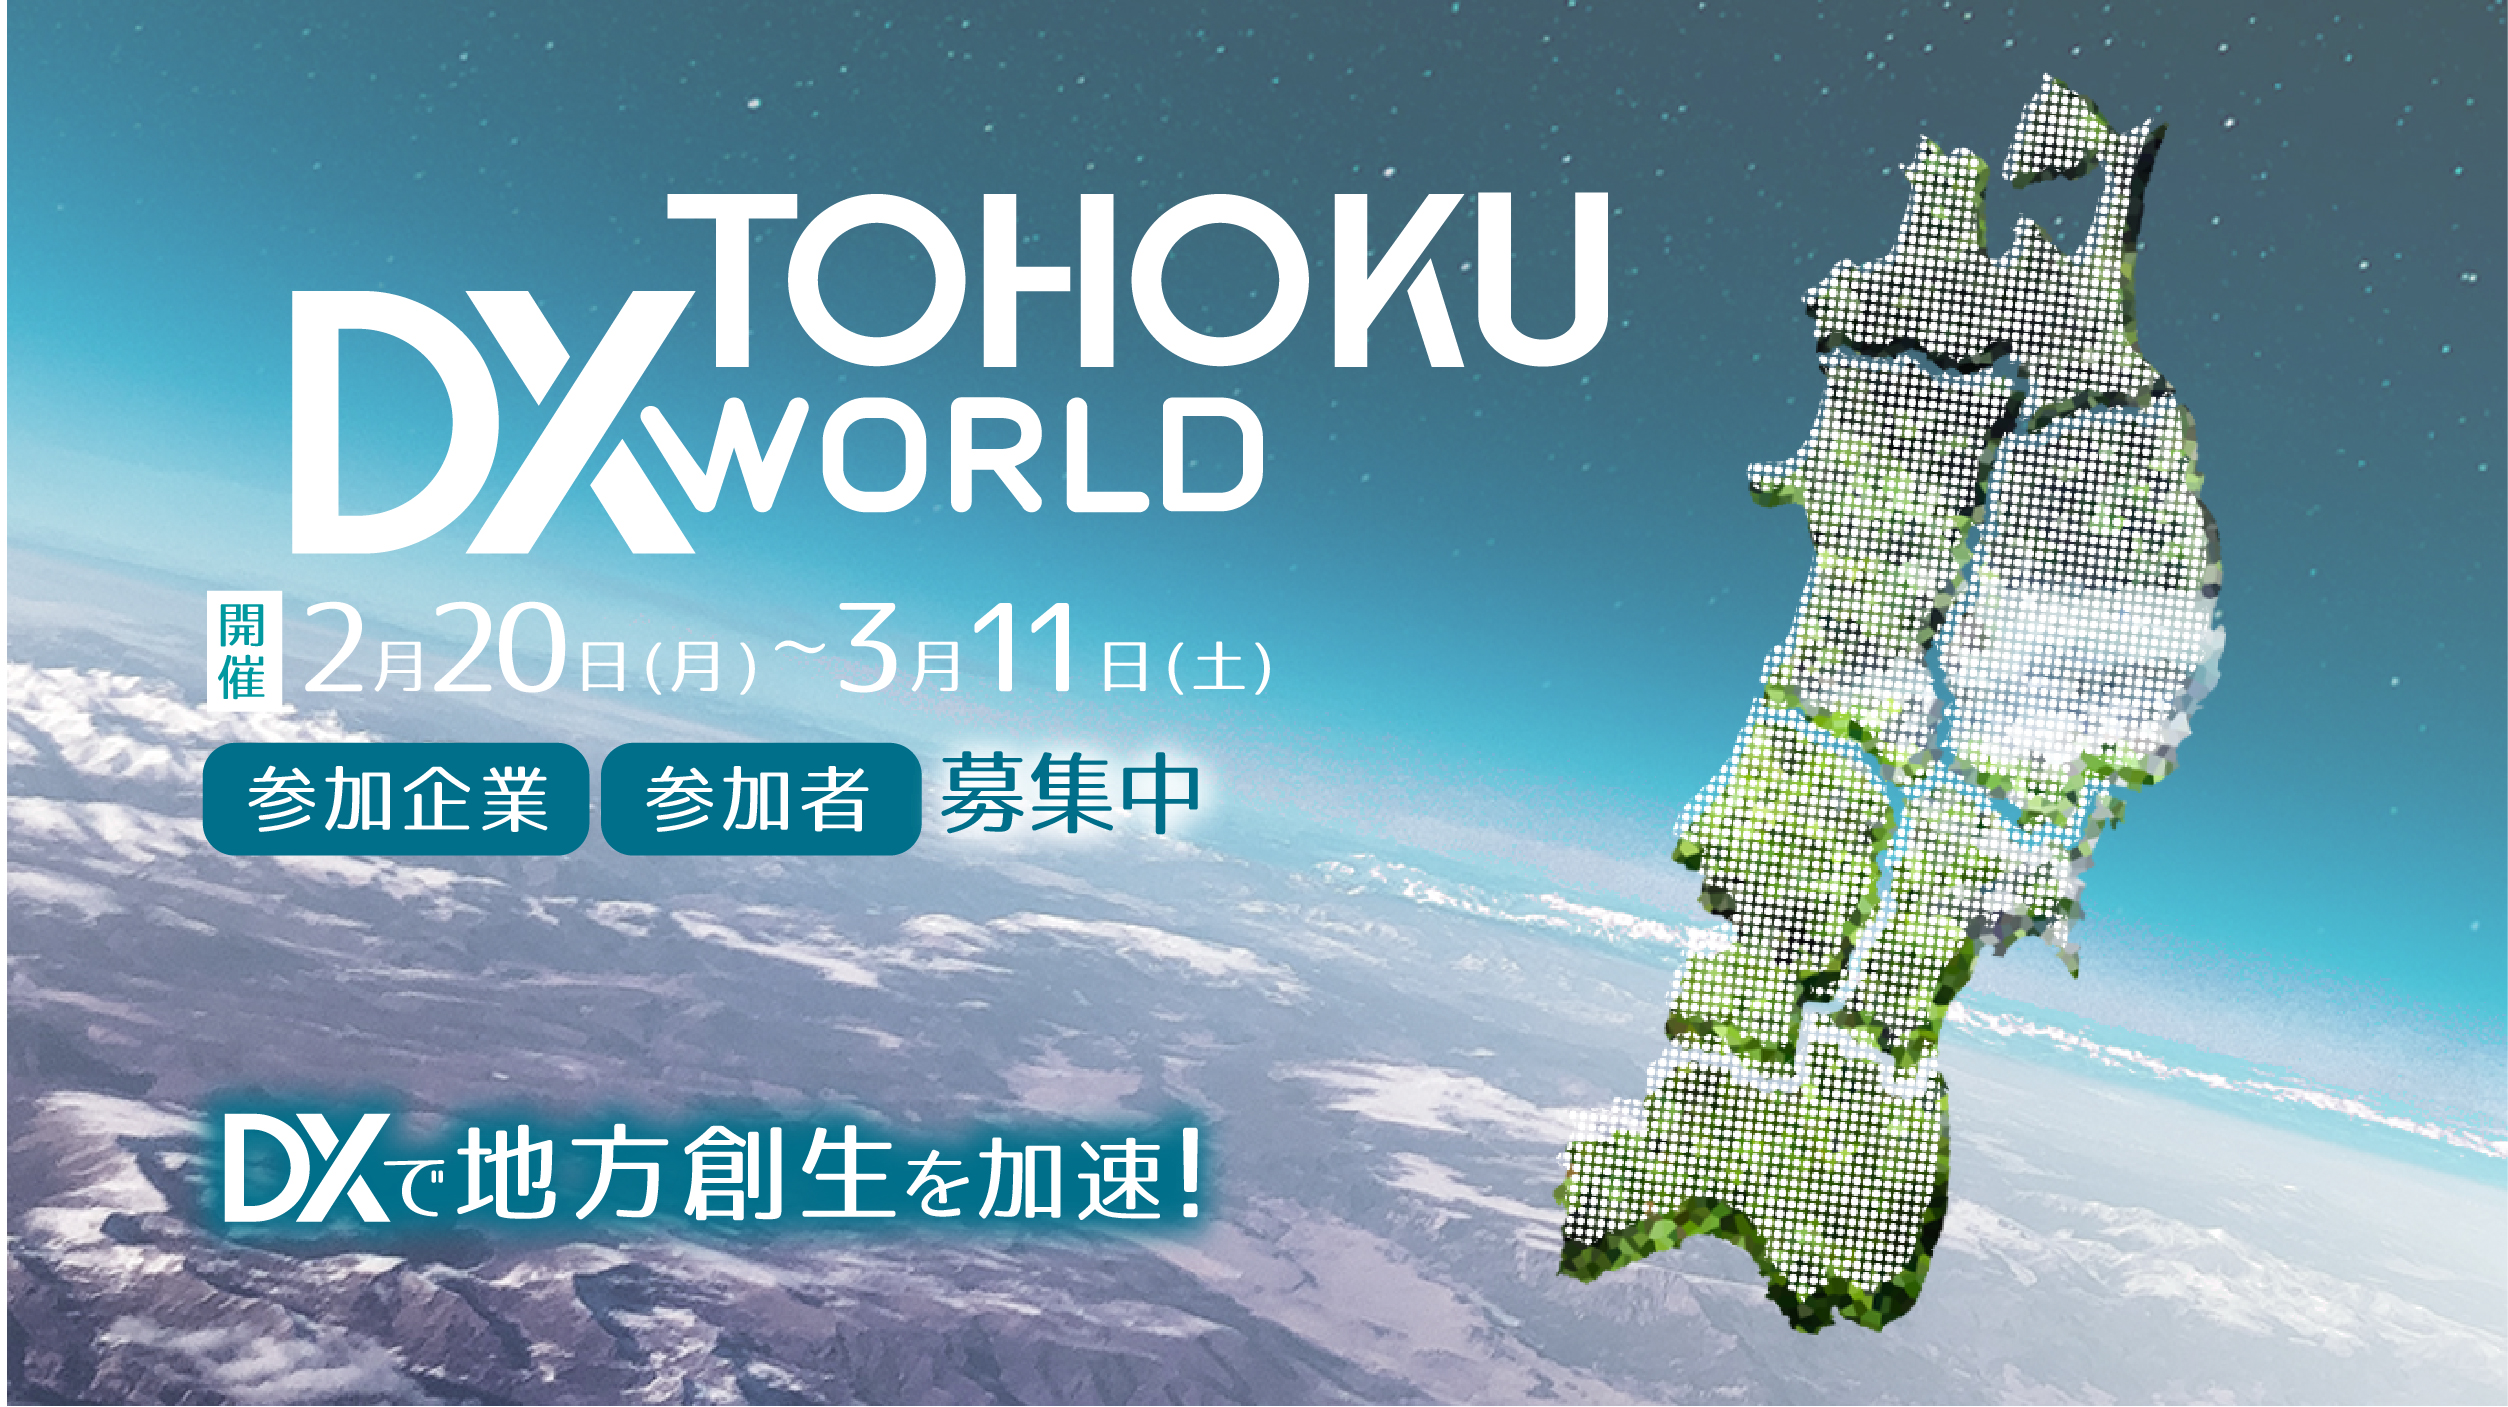 DXで地⽅創⽣を加速させる「TOHOKU DX WORLD 2023」 3/11の講演内容